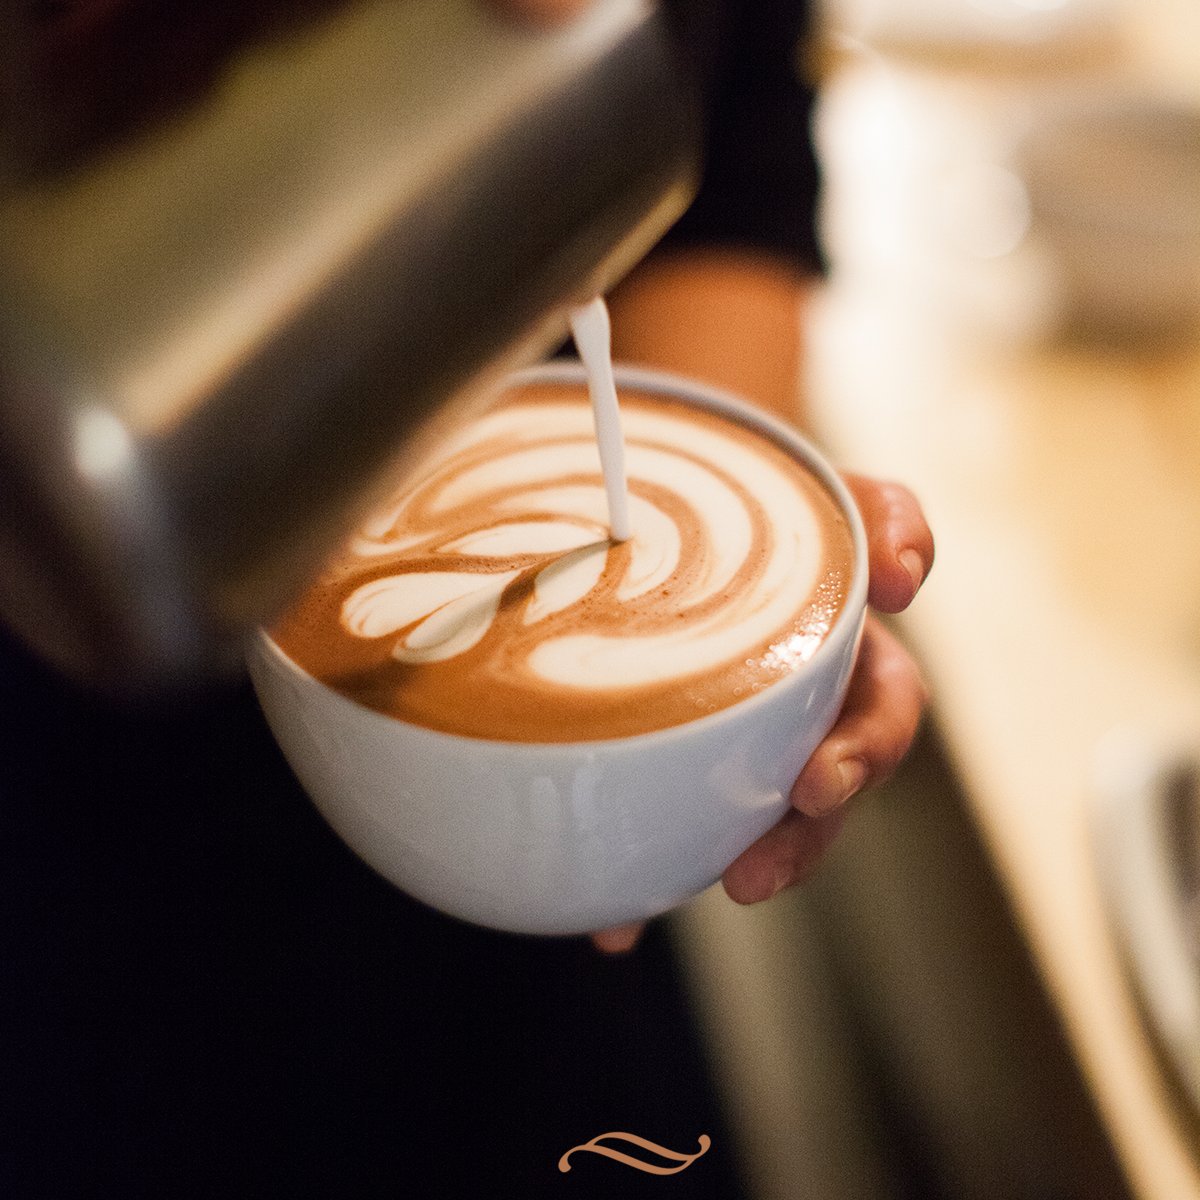 café latte panadería rosetta